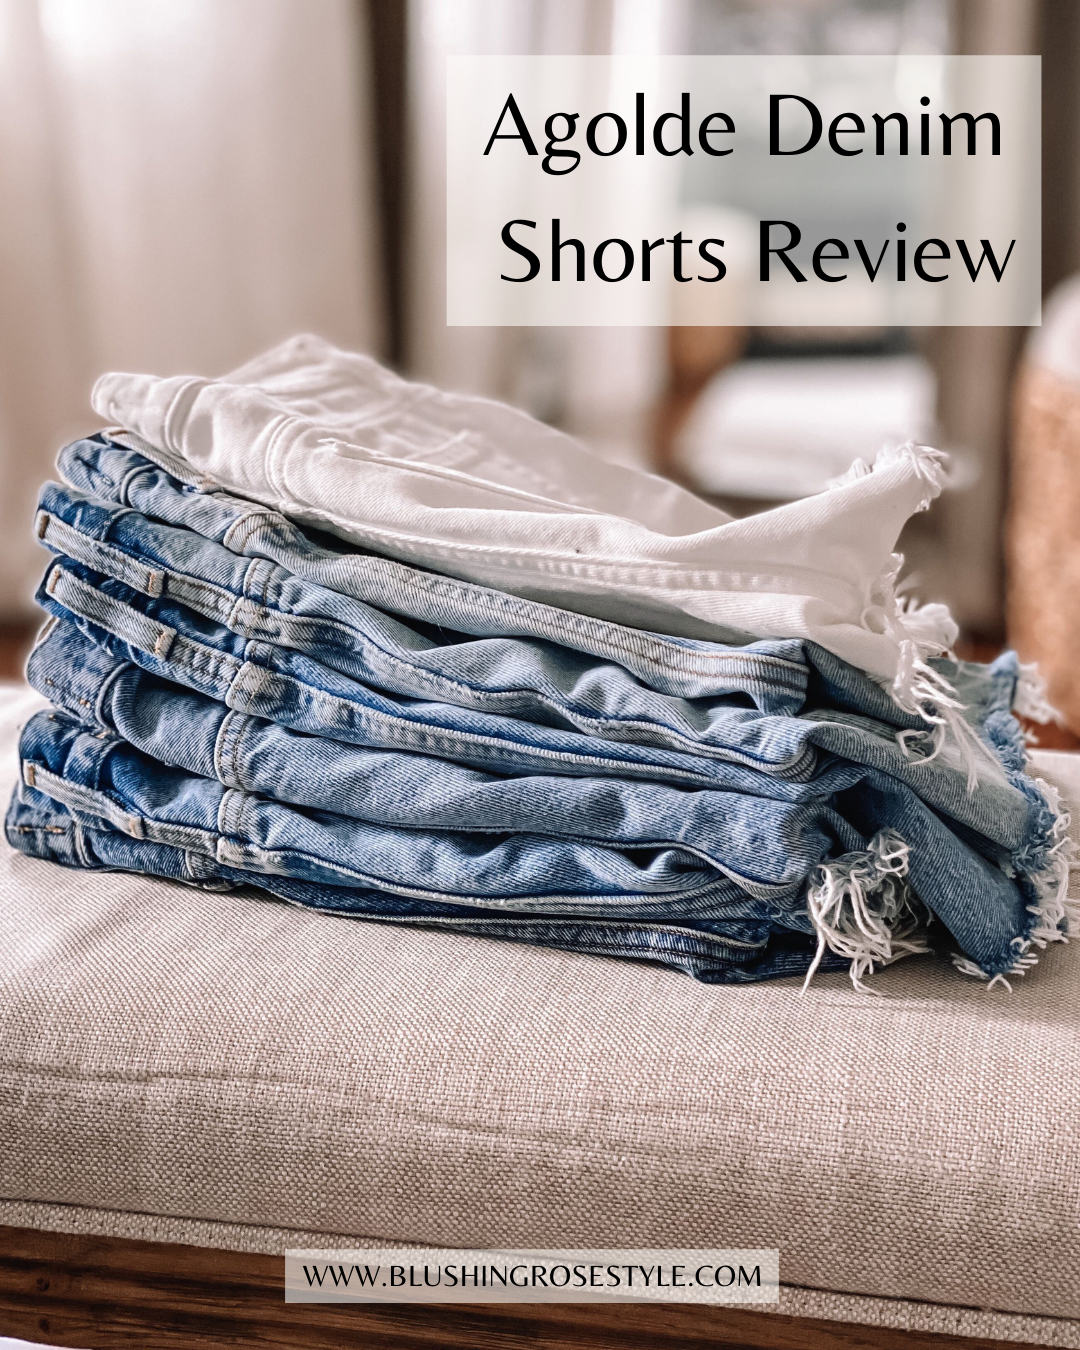 Agolde Denim Shorts Review